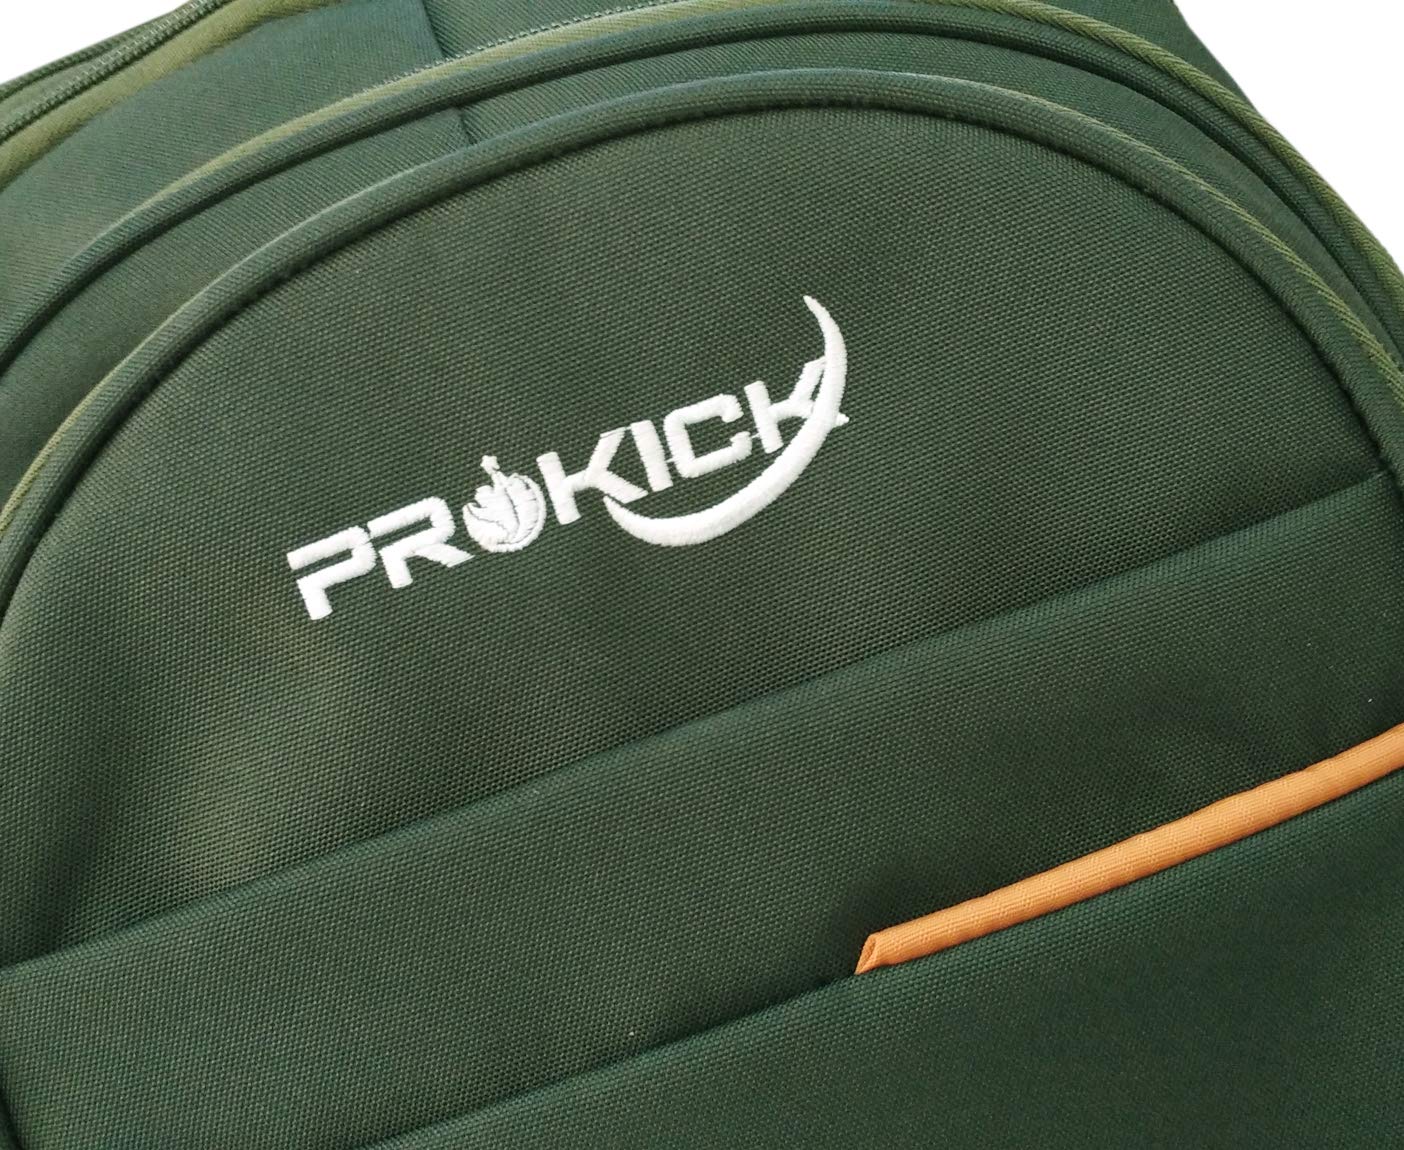 Prokick"Big-5" Panther Series Polyester 40L Backpack - Olive Green - Best Price online Prokicksports.com